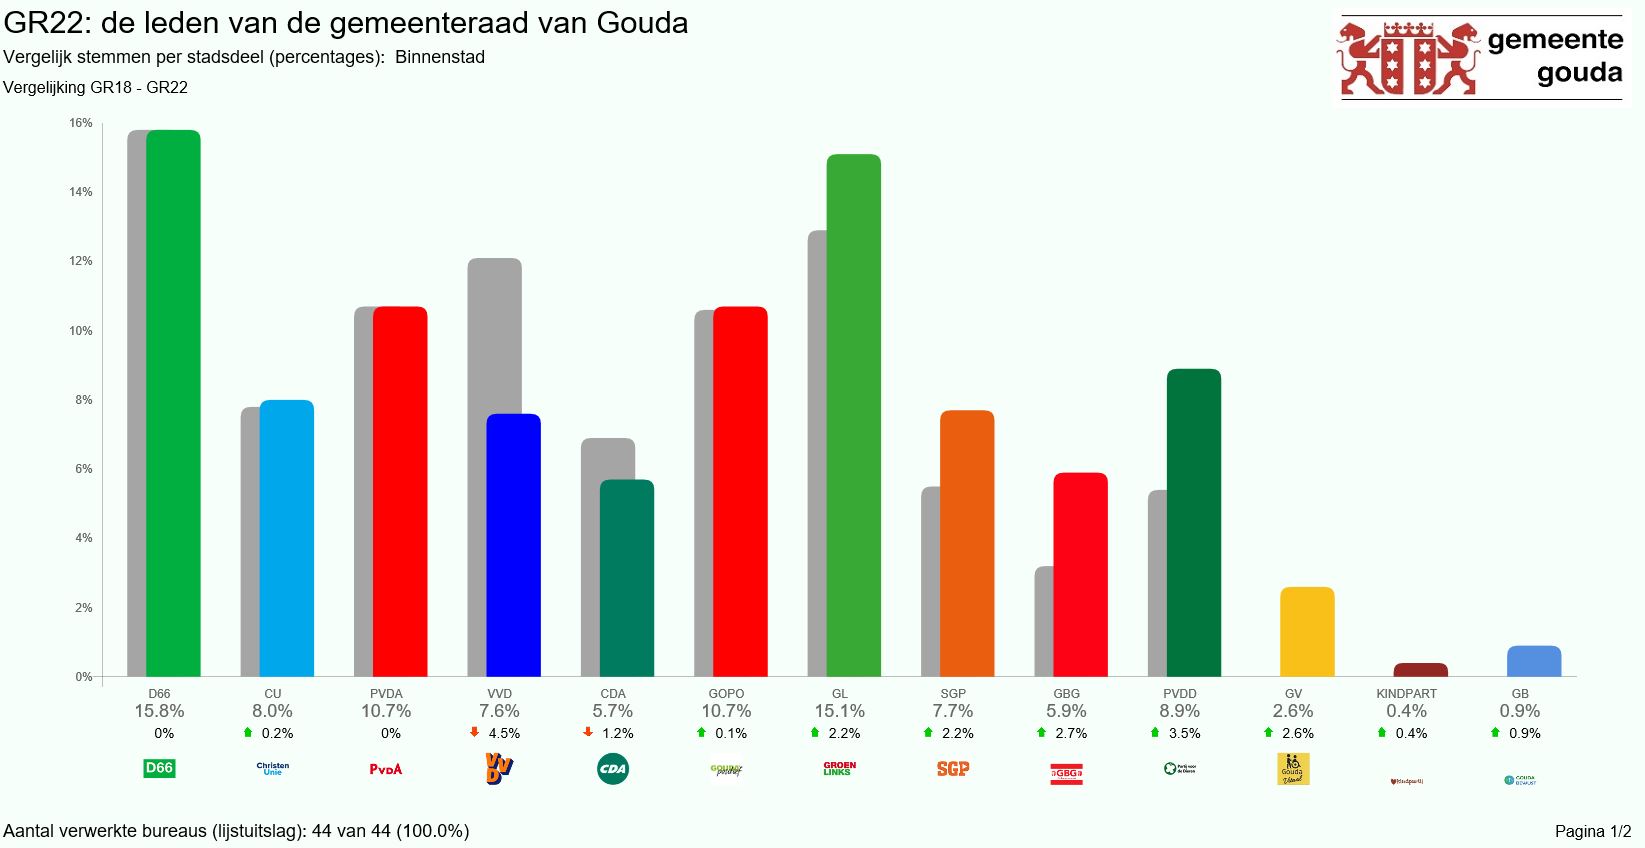 Vergelijking stemmen per partij percentages Binnenstad